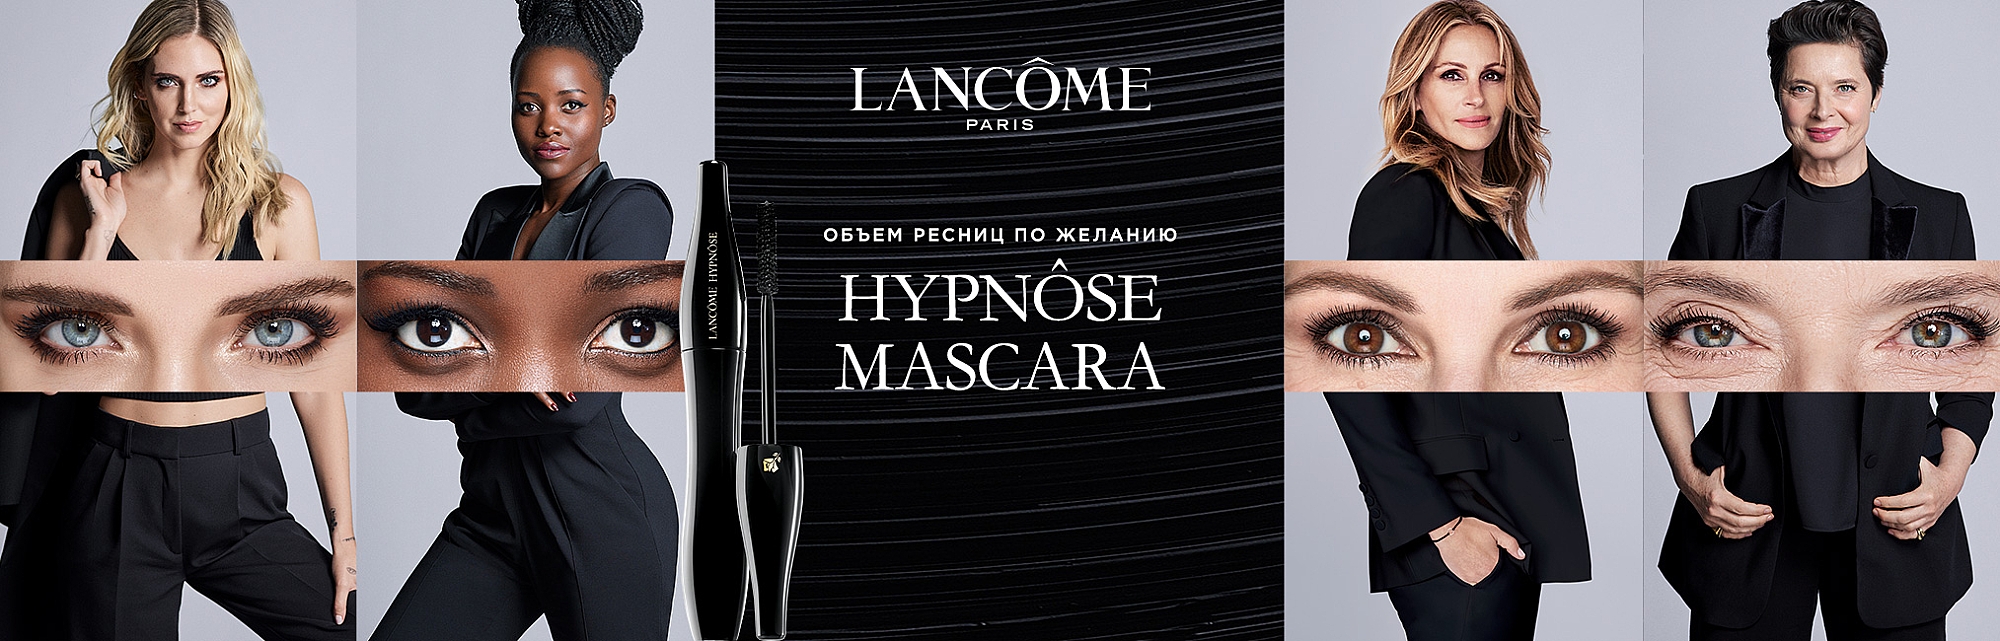 Lancome Hypnose